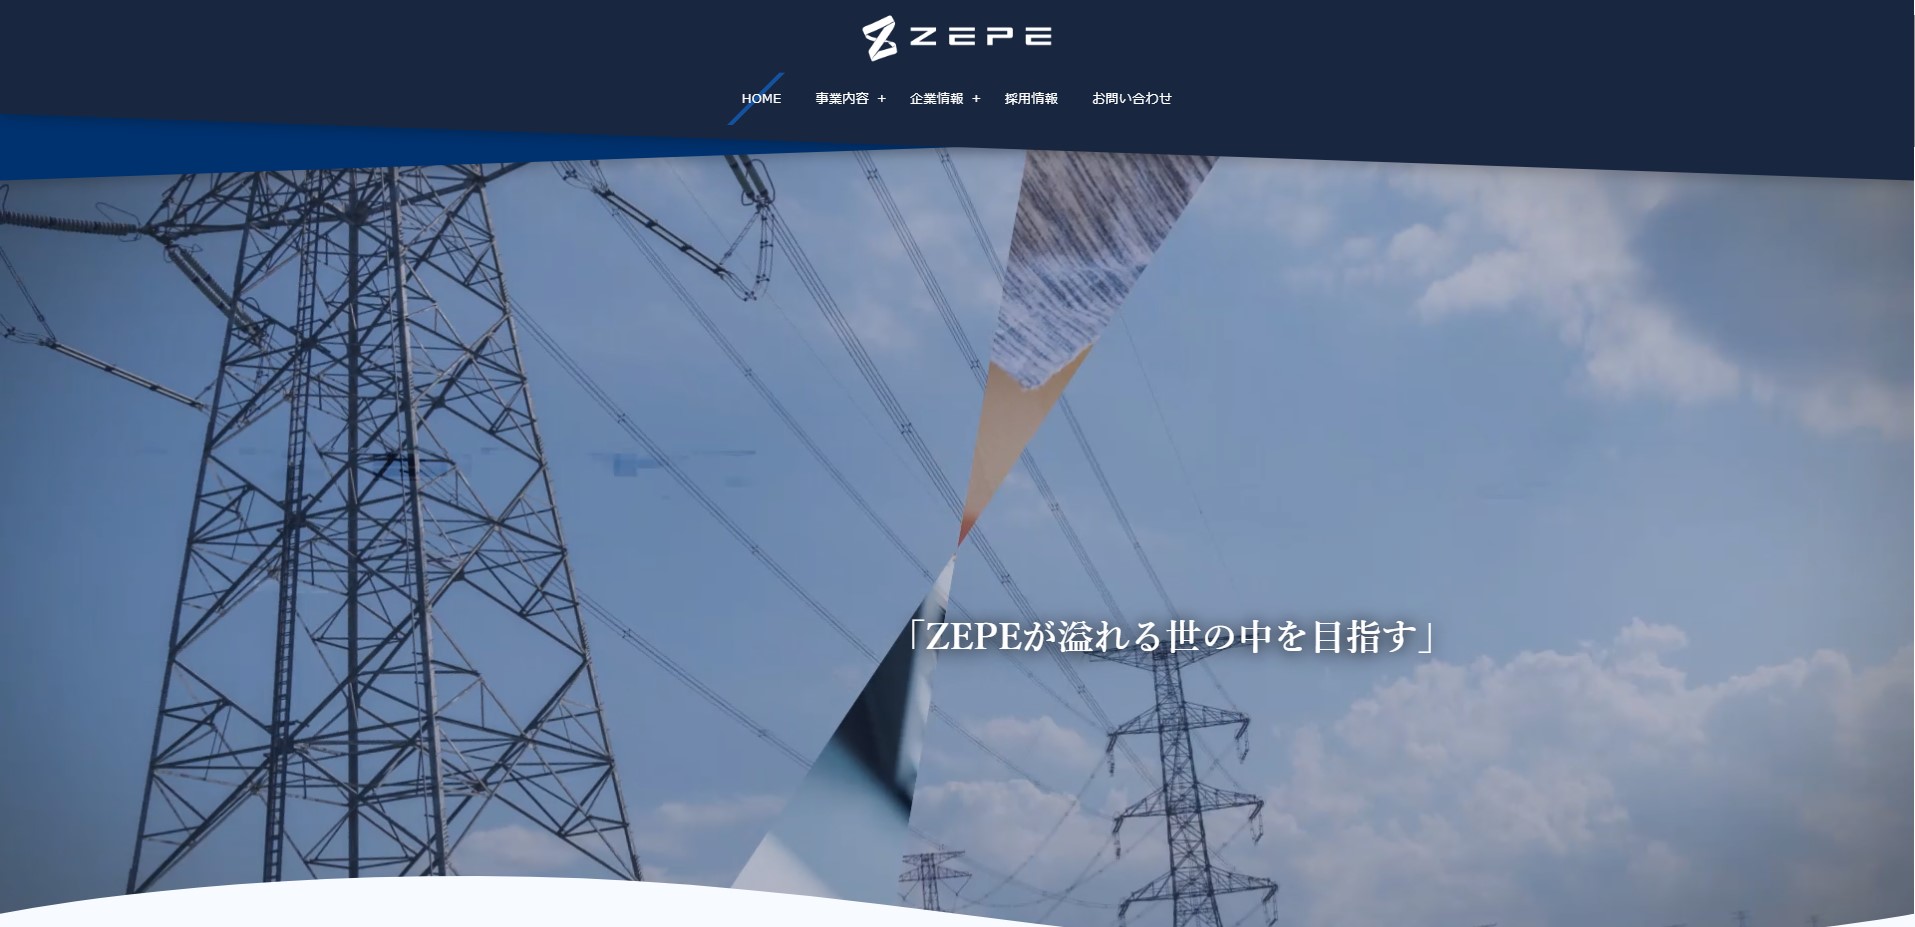 株式会社ZEPE